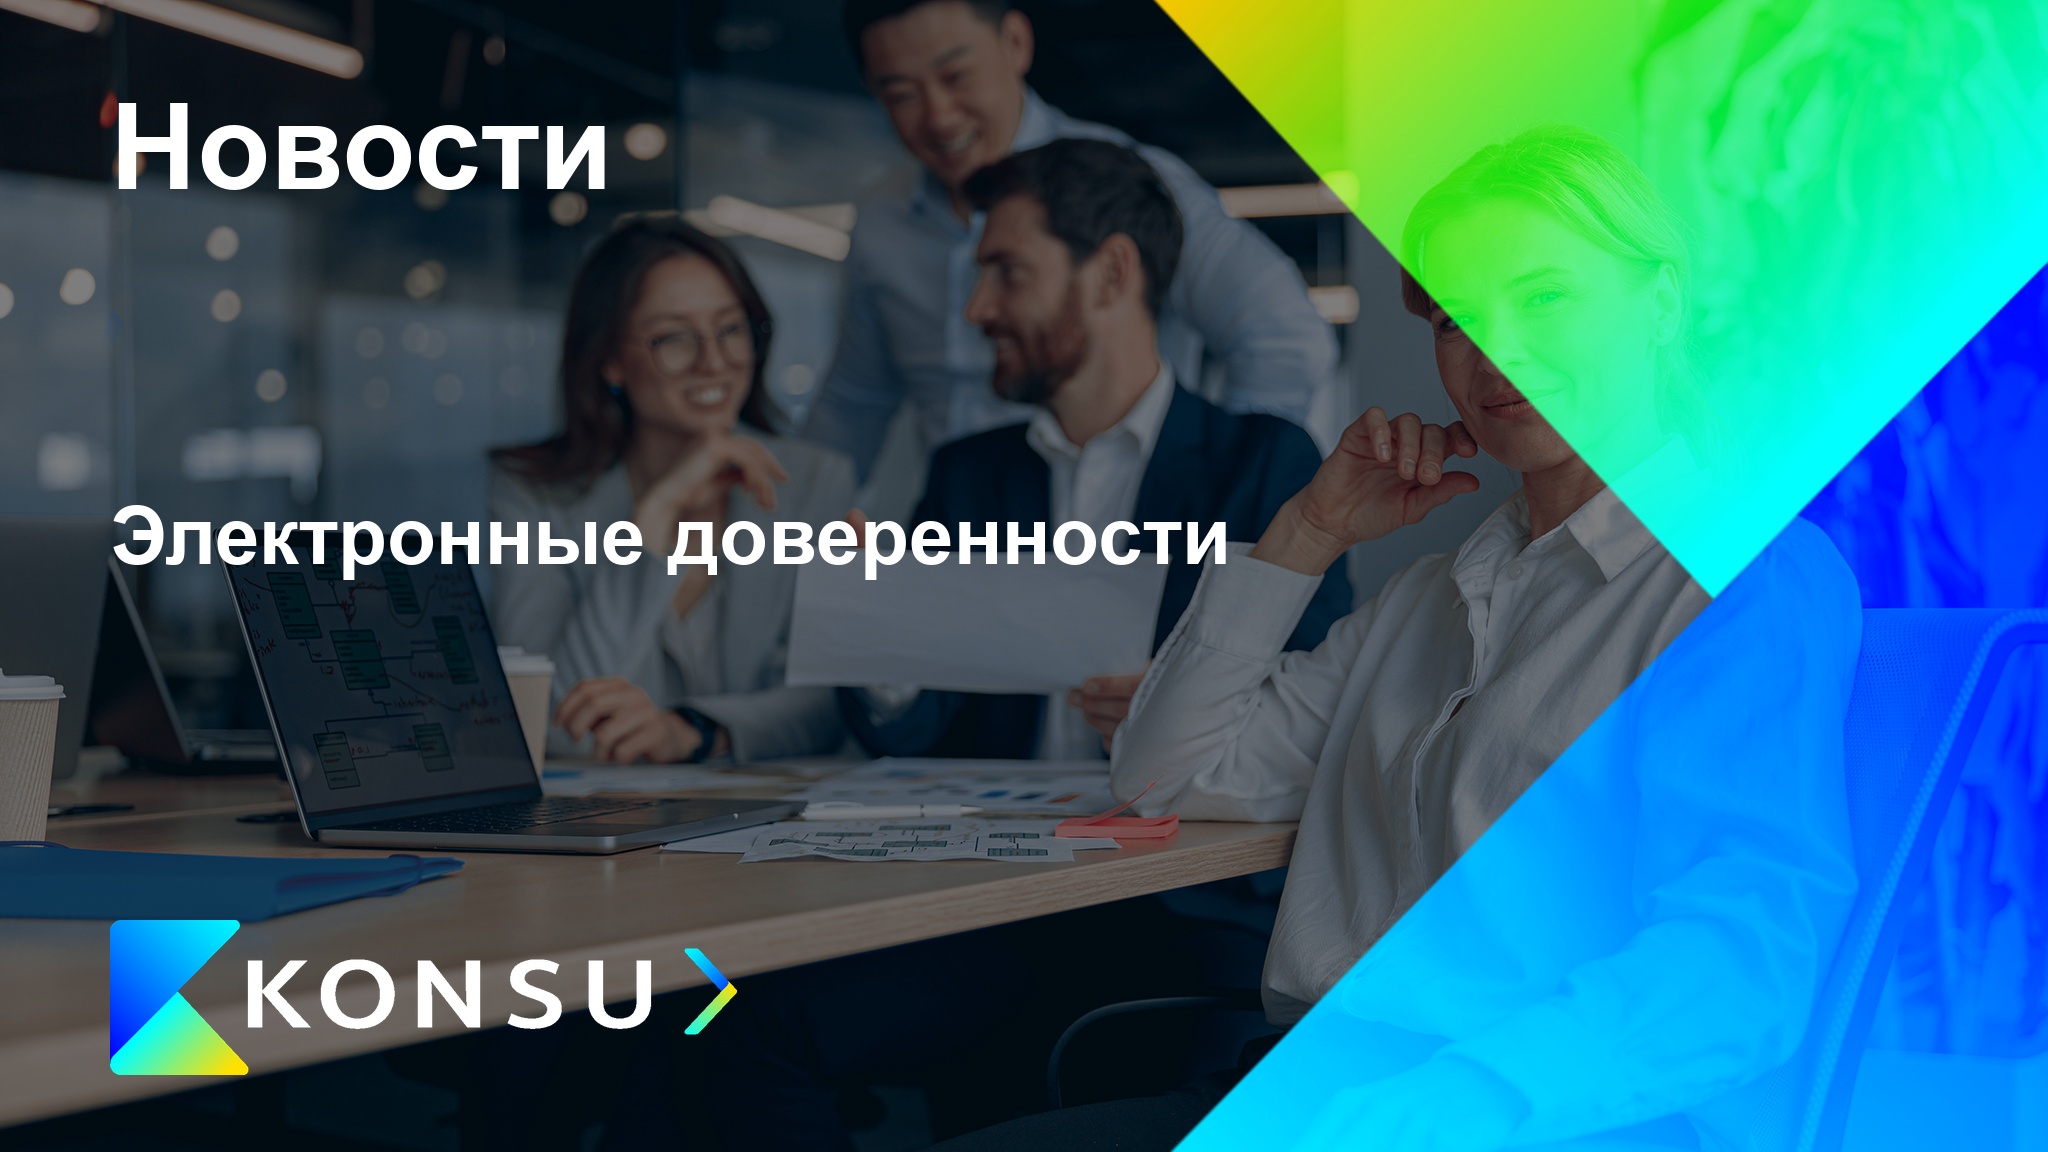 Elektronnye doverennosti ru konsu outsourcing consulting ru kz c